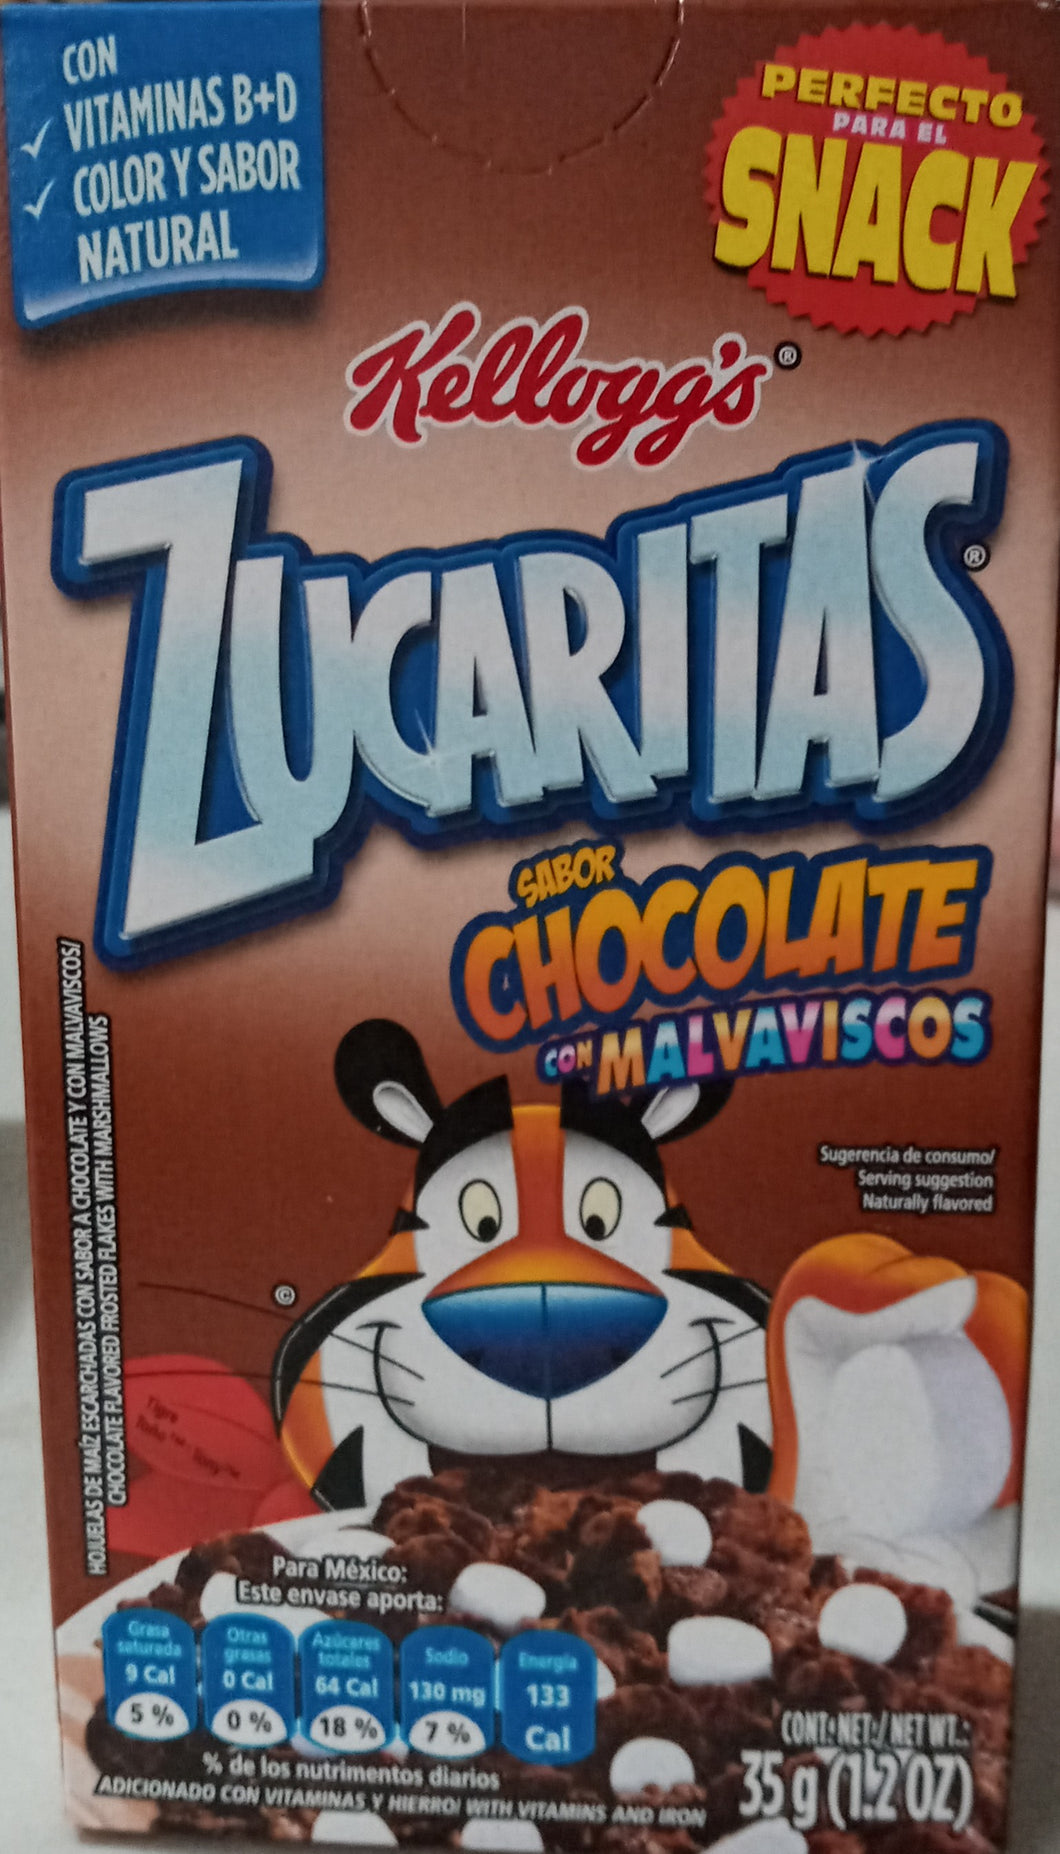 Cereal Zucaritas chocolate Kellogs 35g